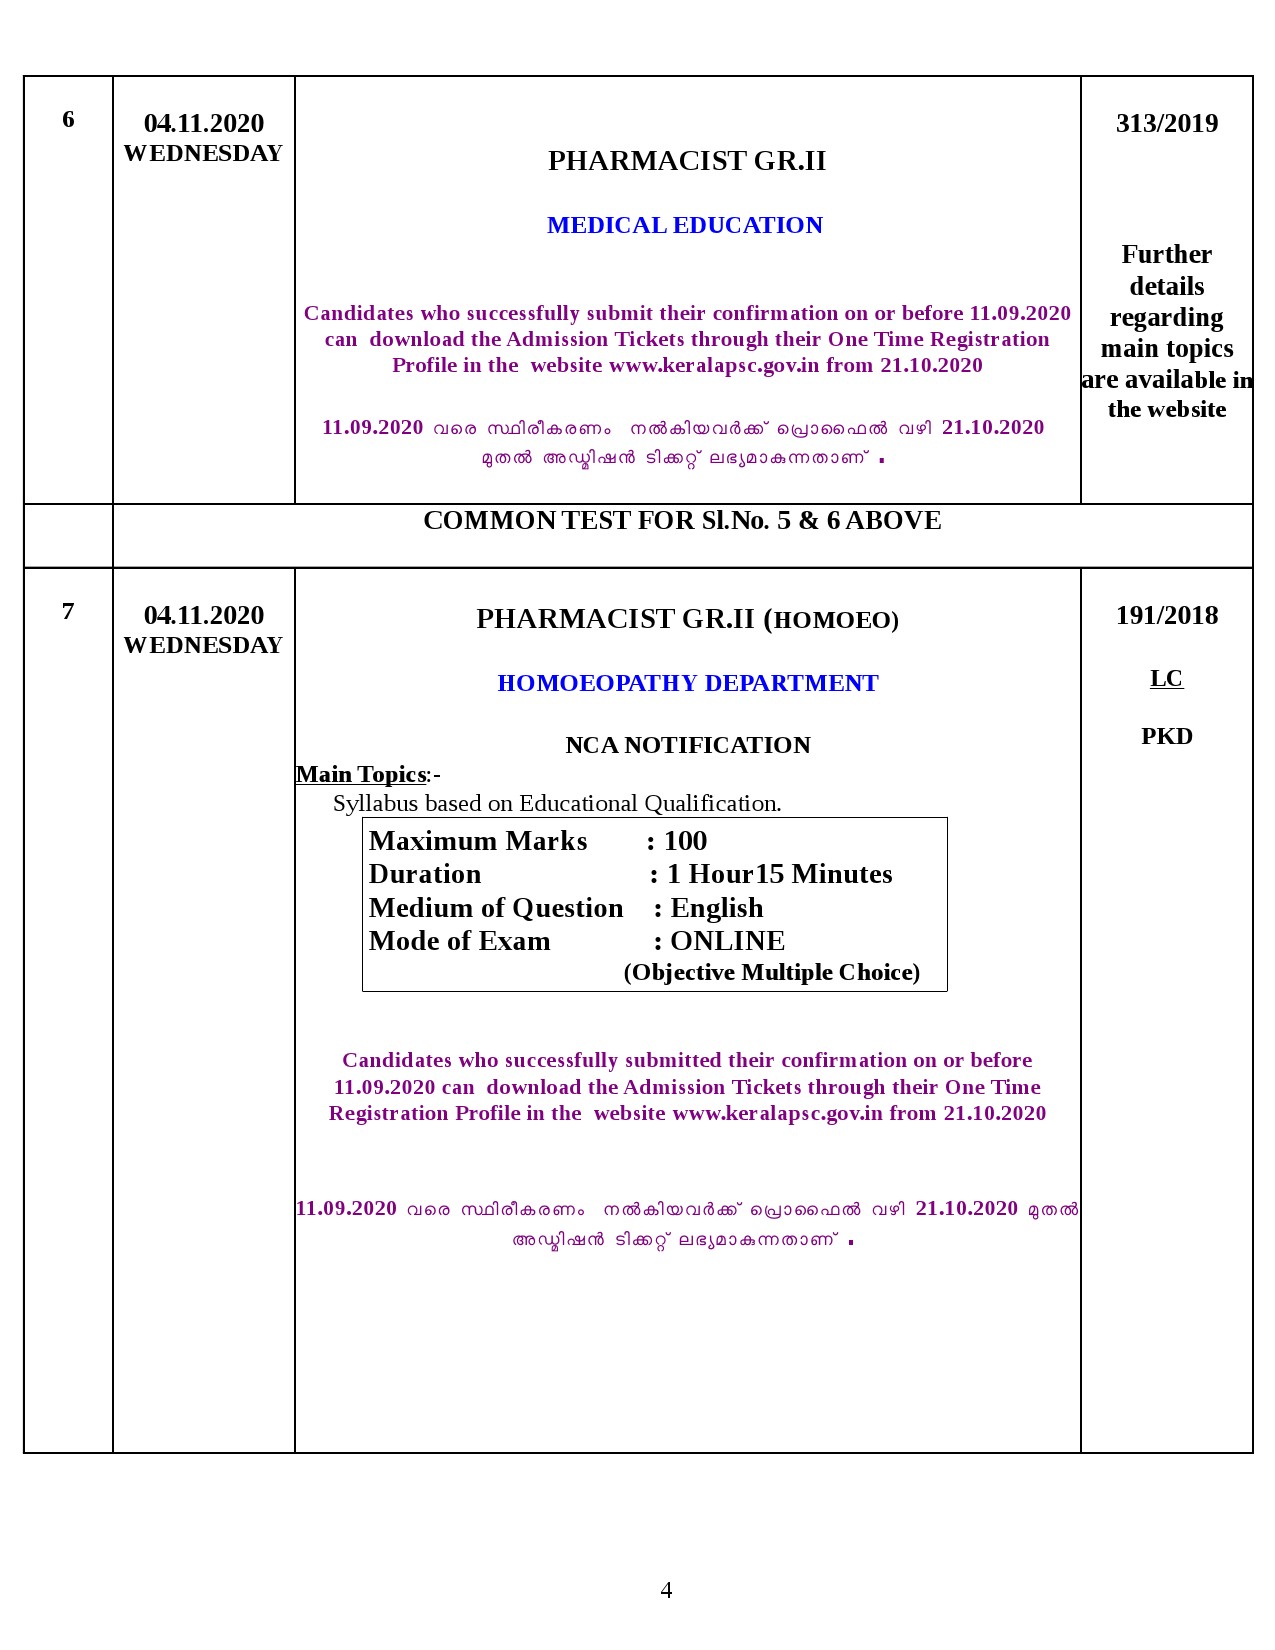 Kerala PSC Final Exam Schedule for November 2020 - Notification Image 4